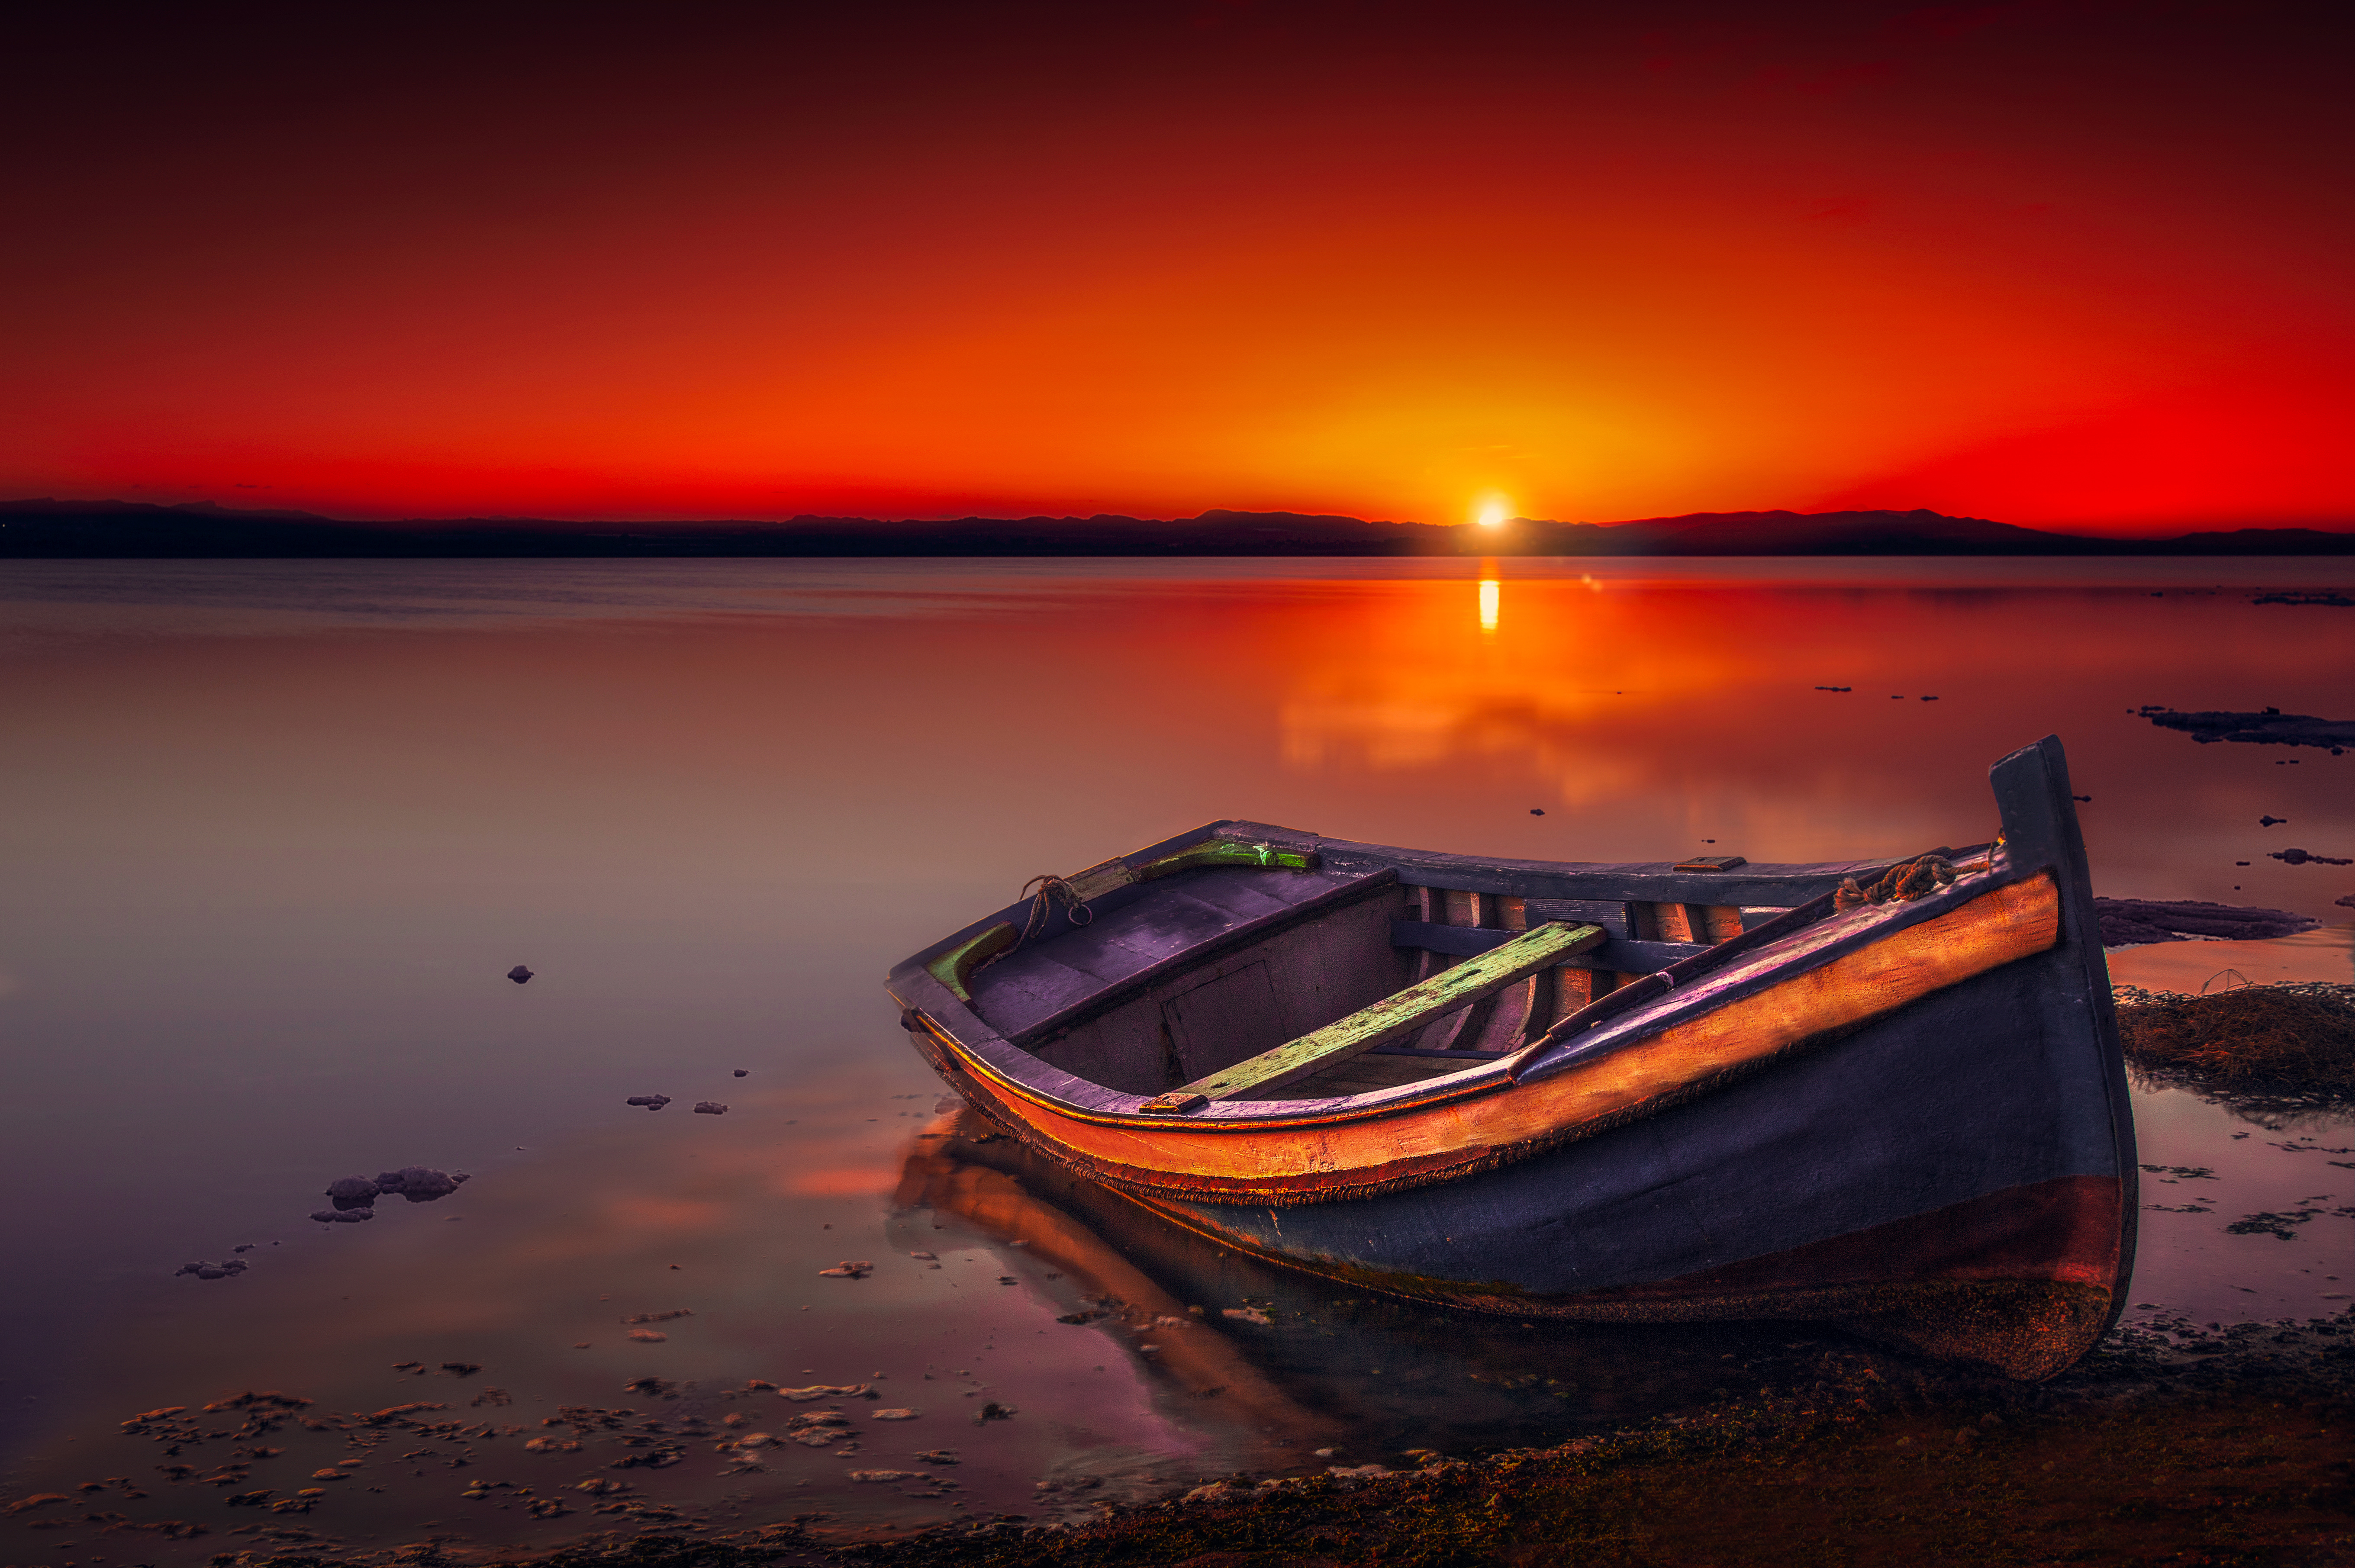 Sunset Boat On Beach - 5441x3623 Wallpaper 